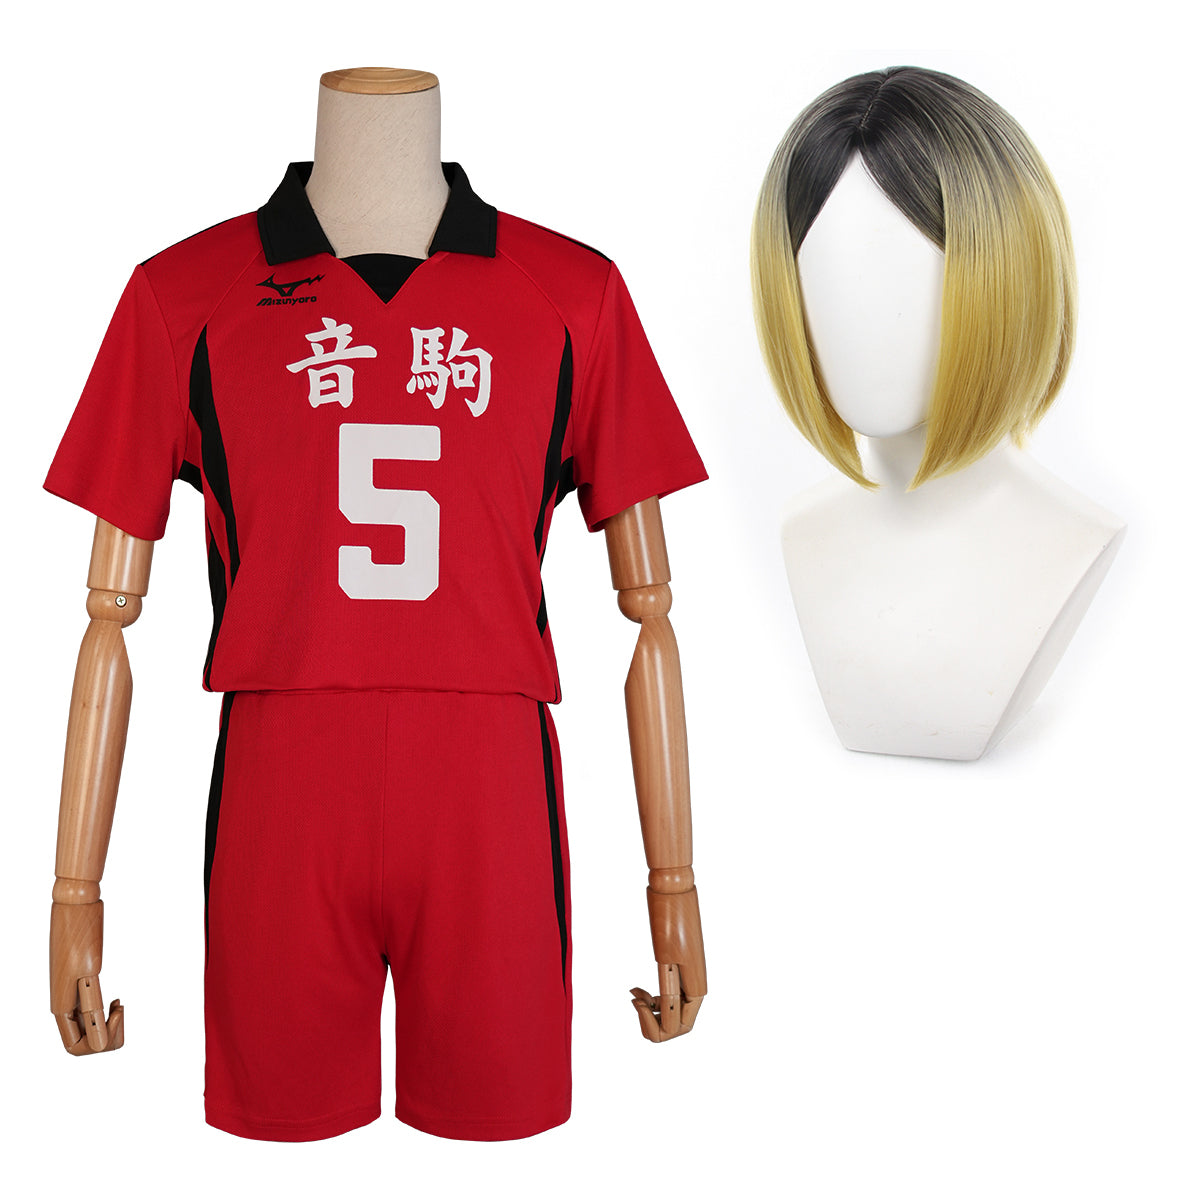 HOLOUN Anime Haikyuu Kozumekenma NO.5 Cosplay Costume Jersey Wig Nekoma High School Uniform Volleyball Club